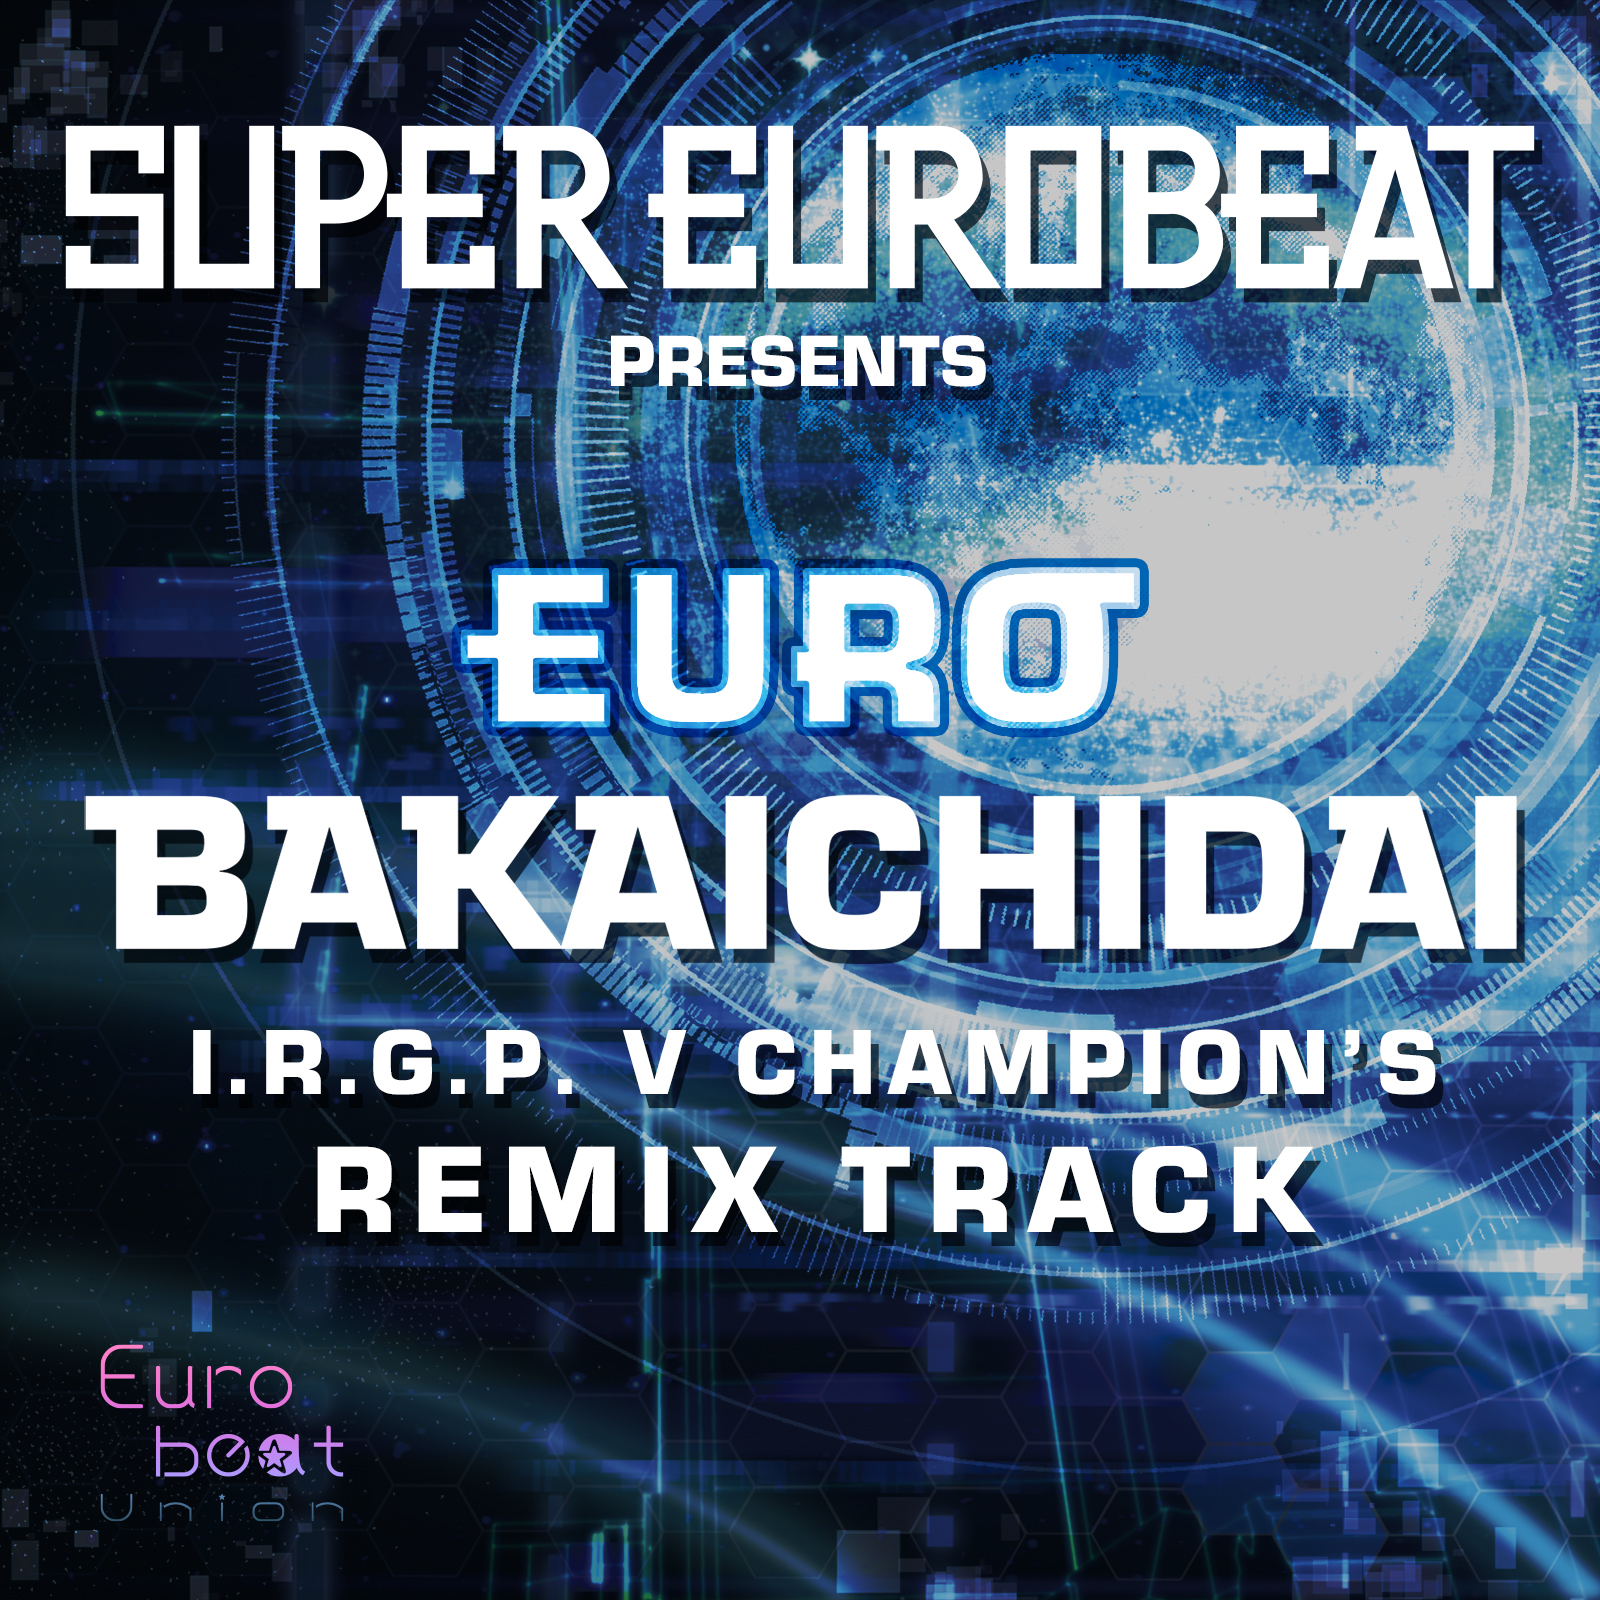 Download free Super Eurobeat 170 Rar